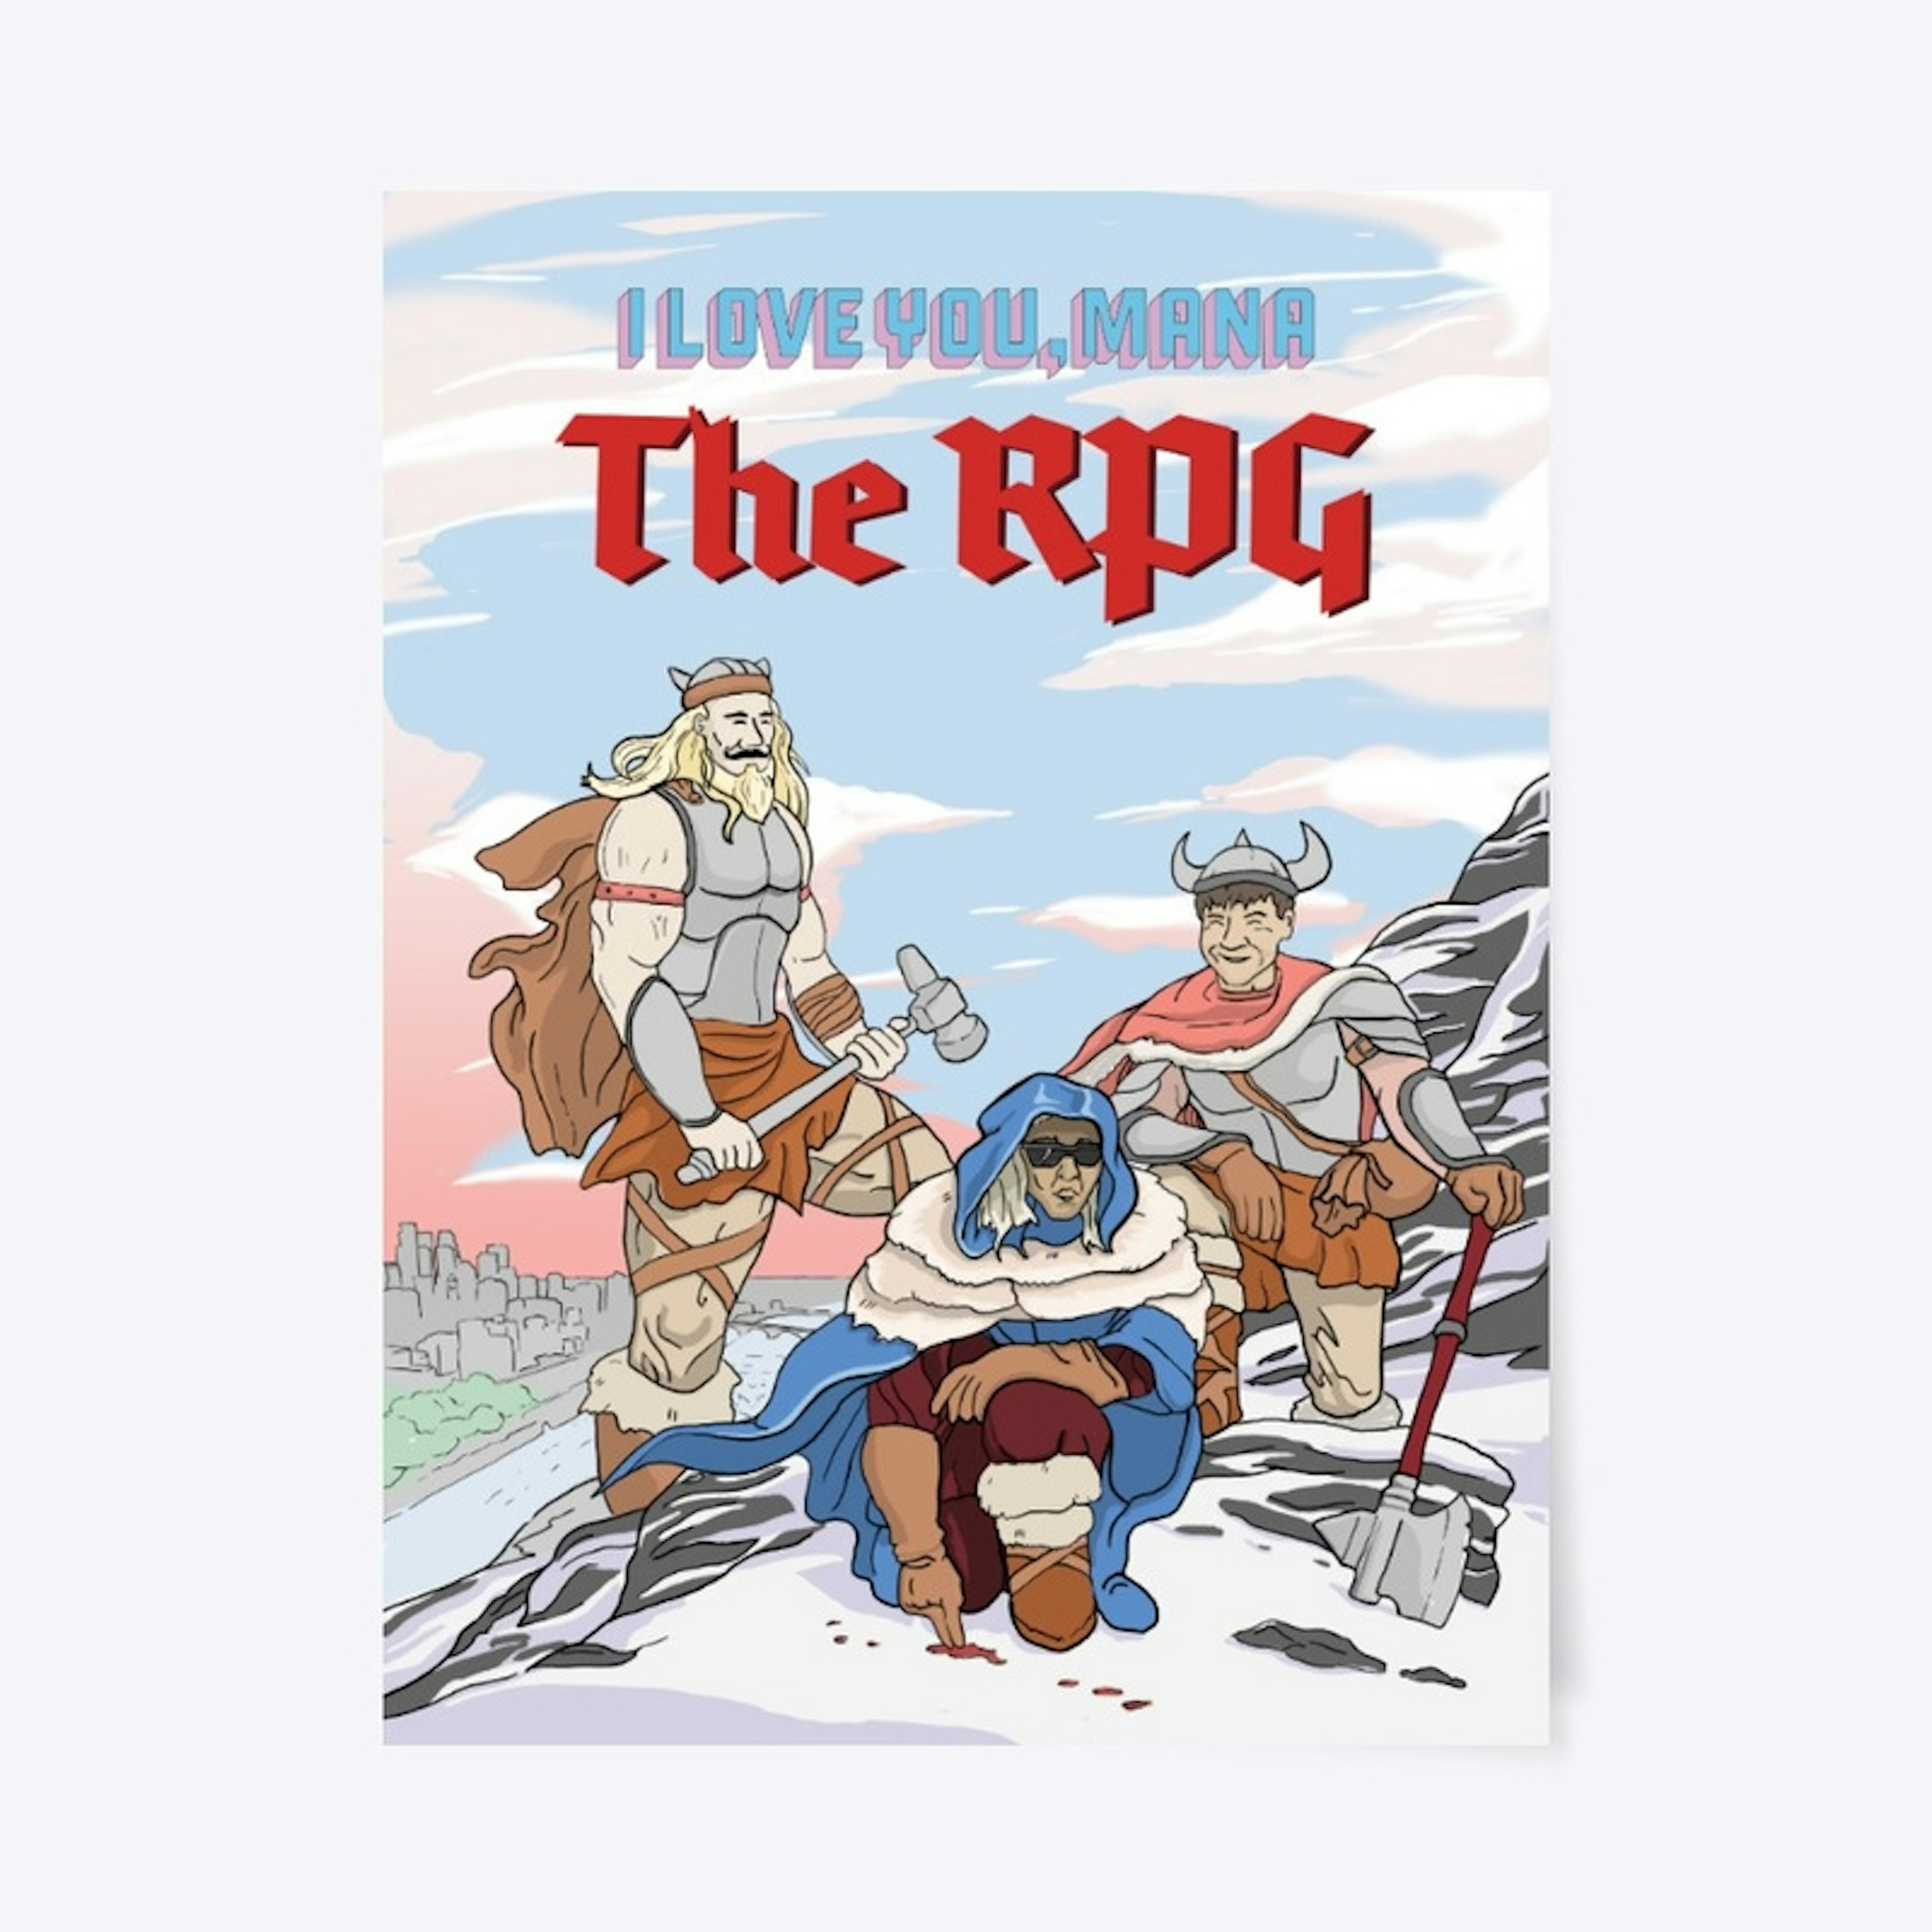 ILYM "The RPG" Poster